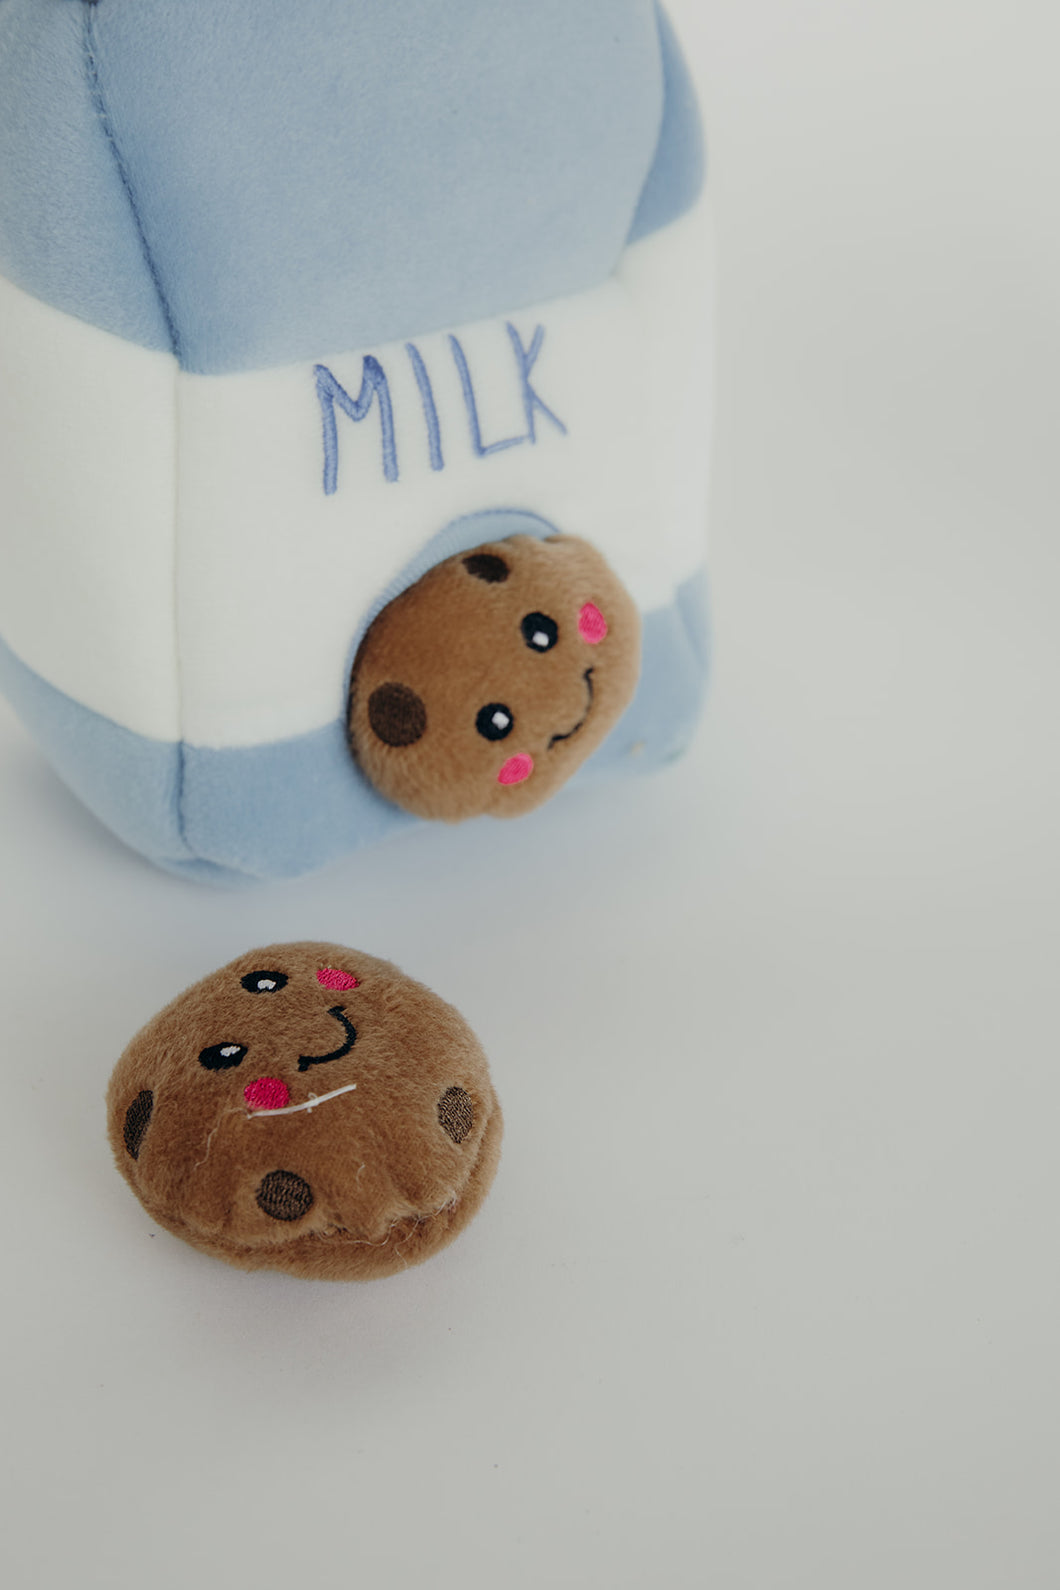 Milk and cookies - burrow